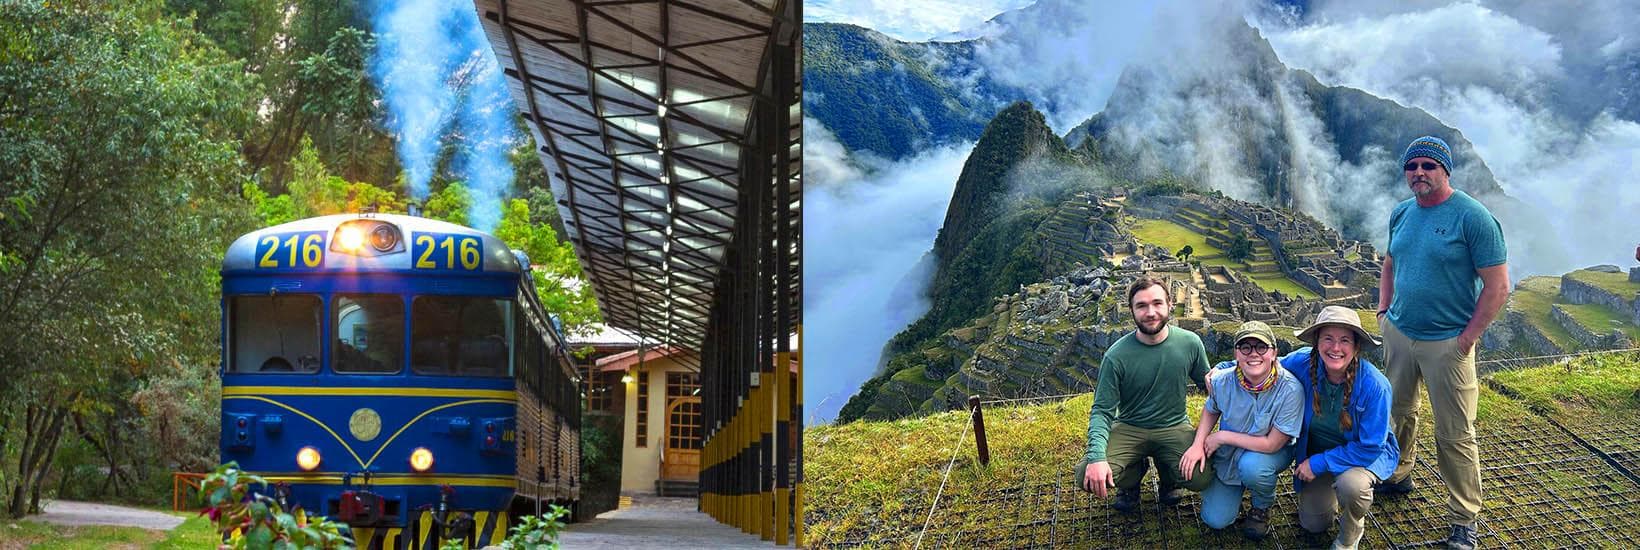 Machu Picchu Tours by Train